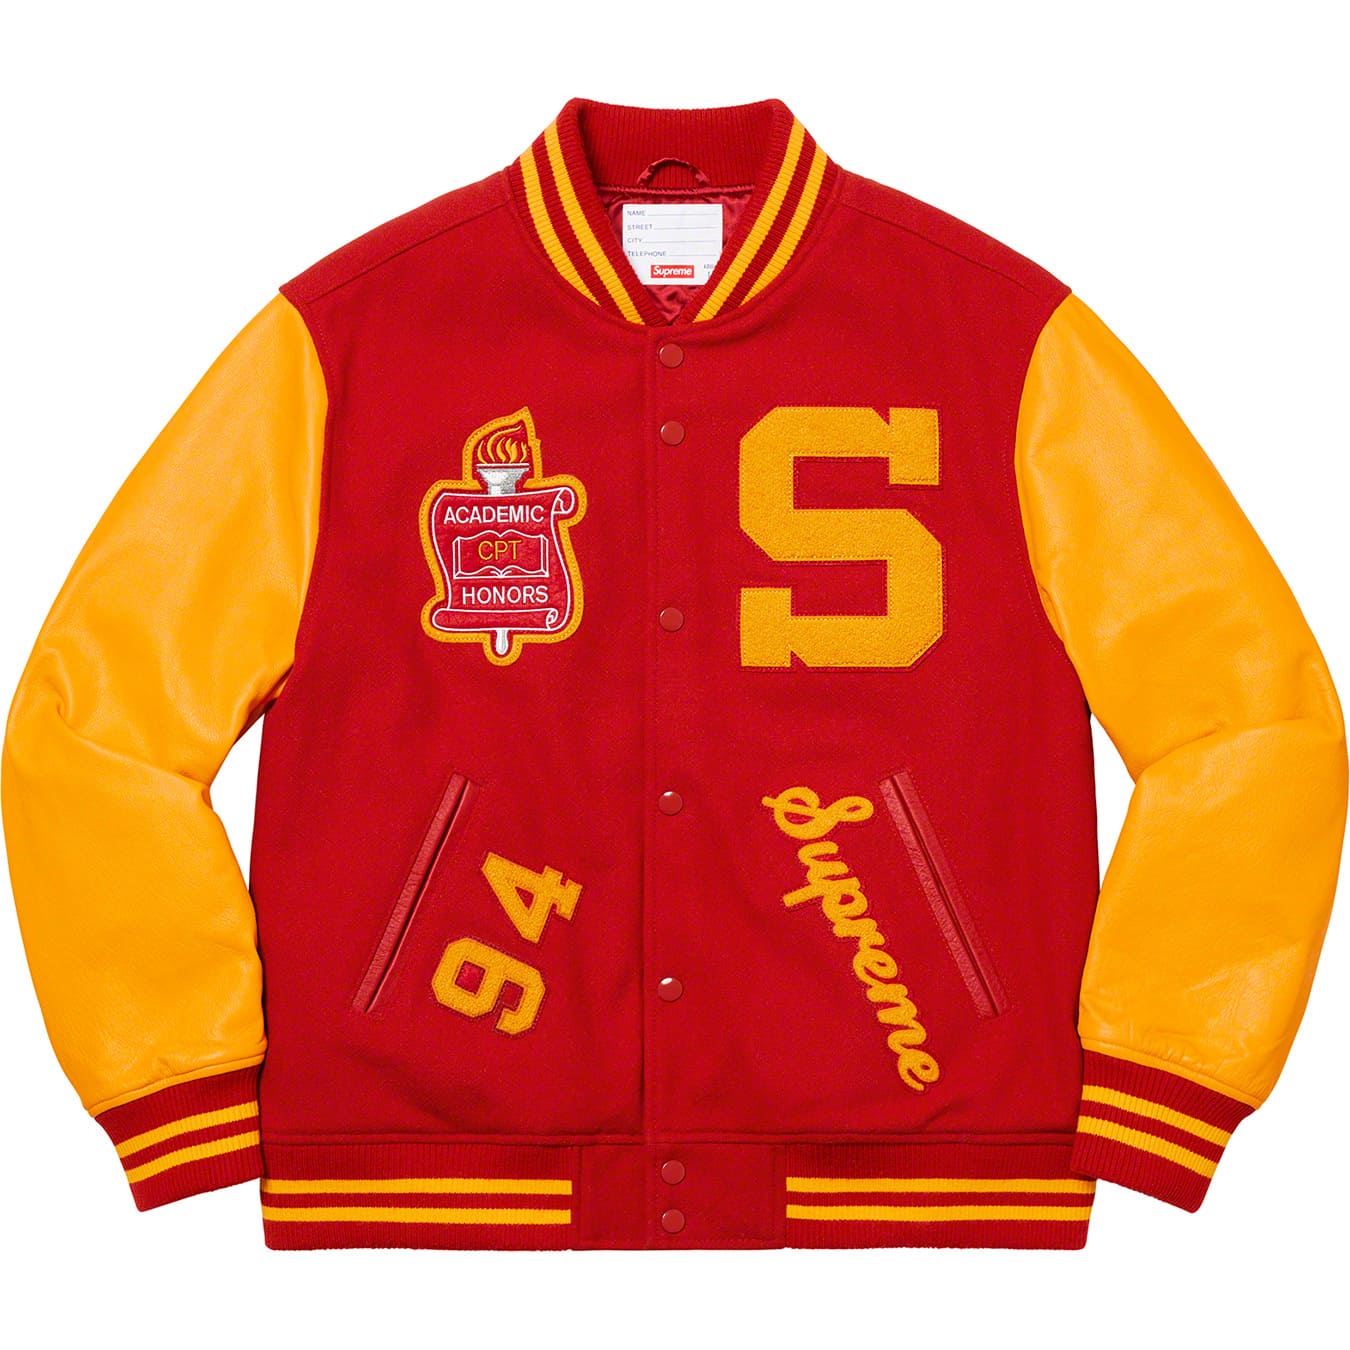 Supreme Team Varsity Jacket